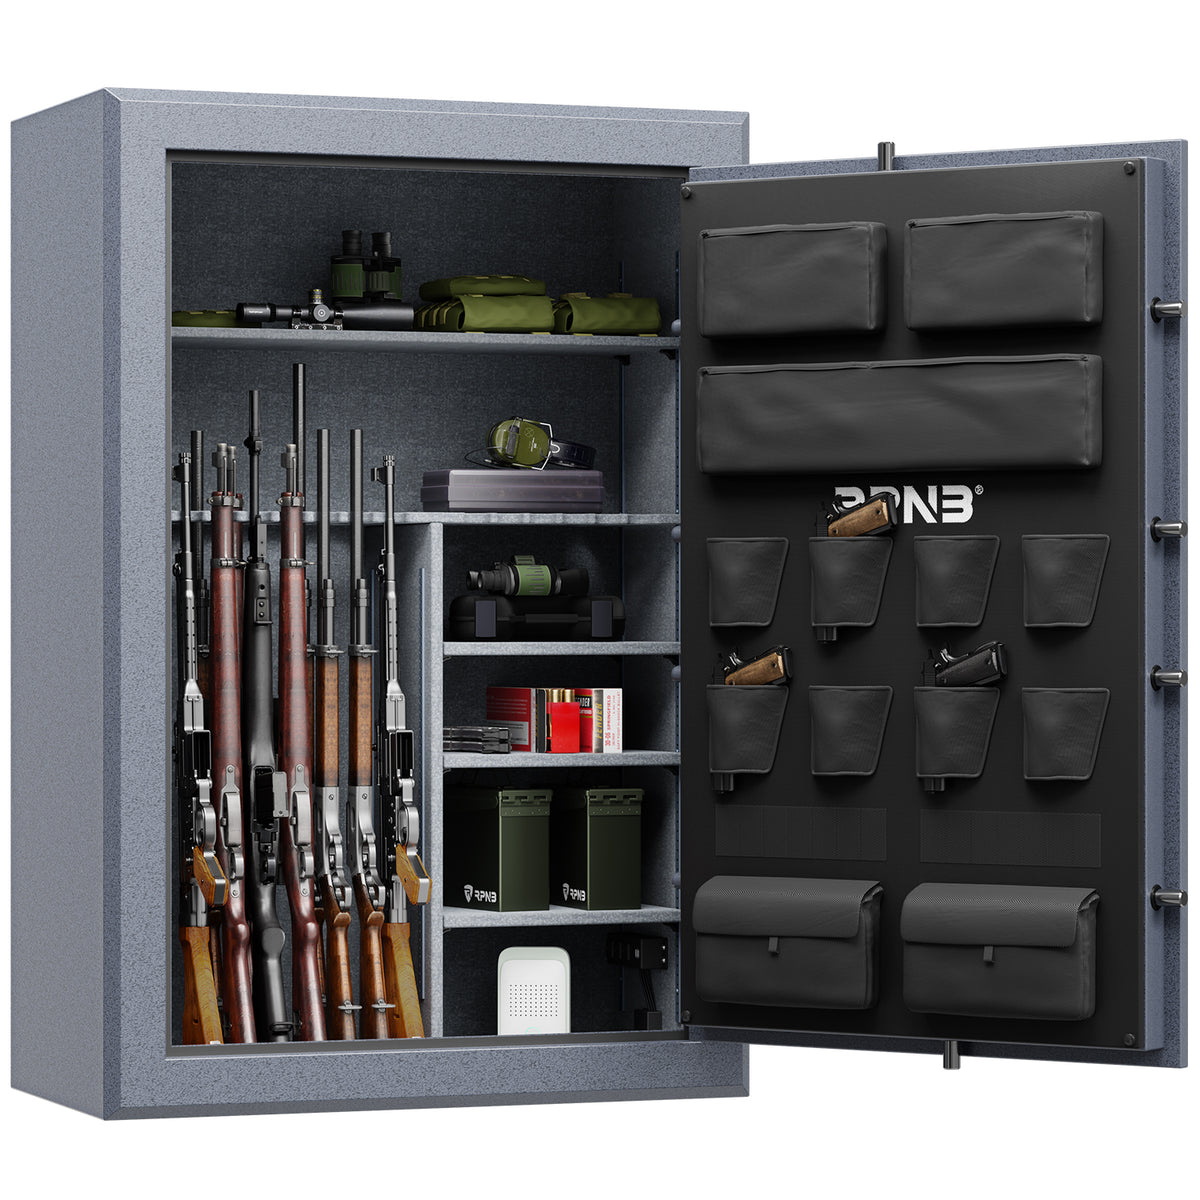 RPNB RPFS45-G 45 Gun Fireproof Biometric Gun Safe Grey Door Open Full